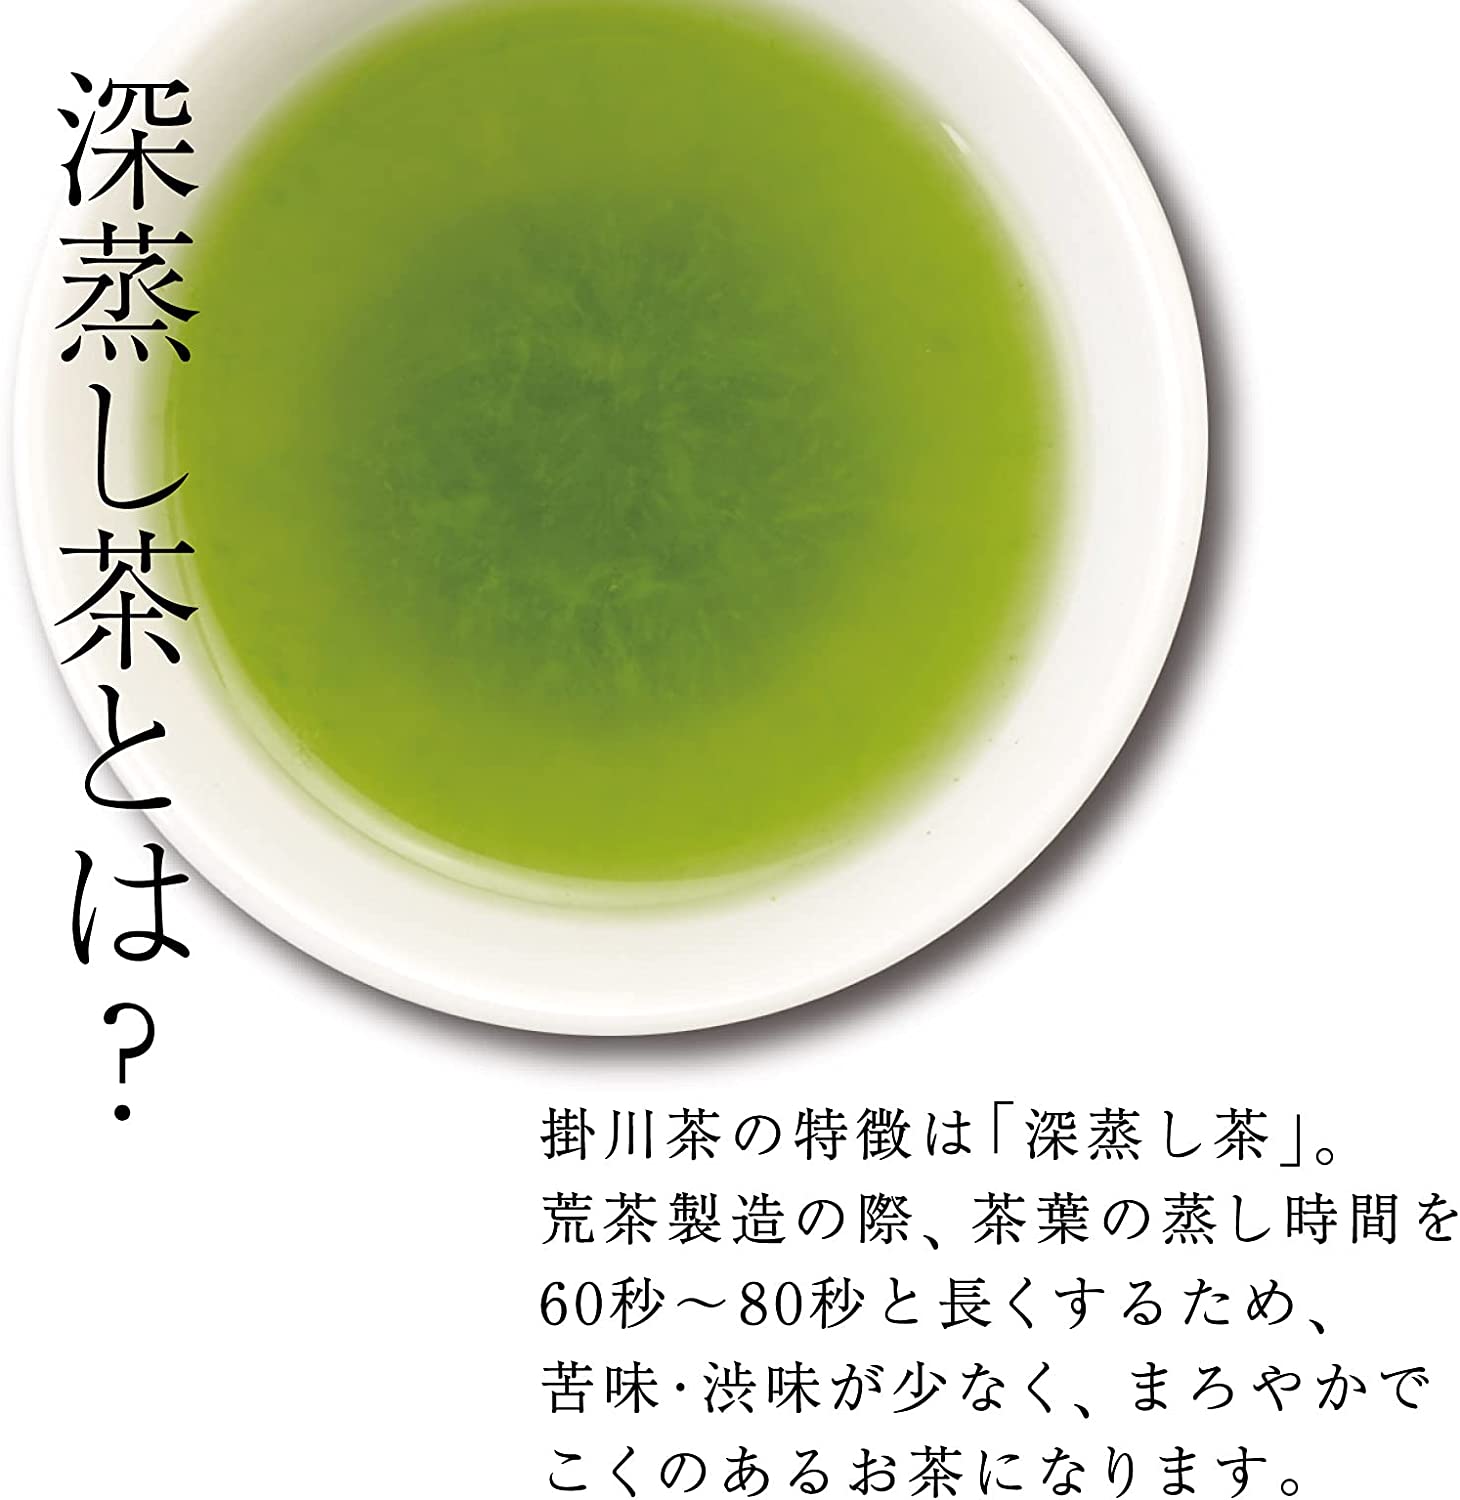 Genmaicha Tea Bag with Matcha Green Tea from Shizuoka Prefecture 2.5g x 100P by Bimisaryo - NihonMura